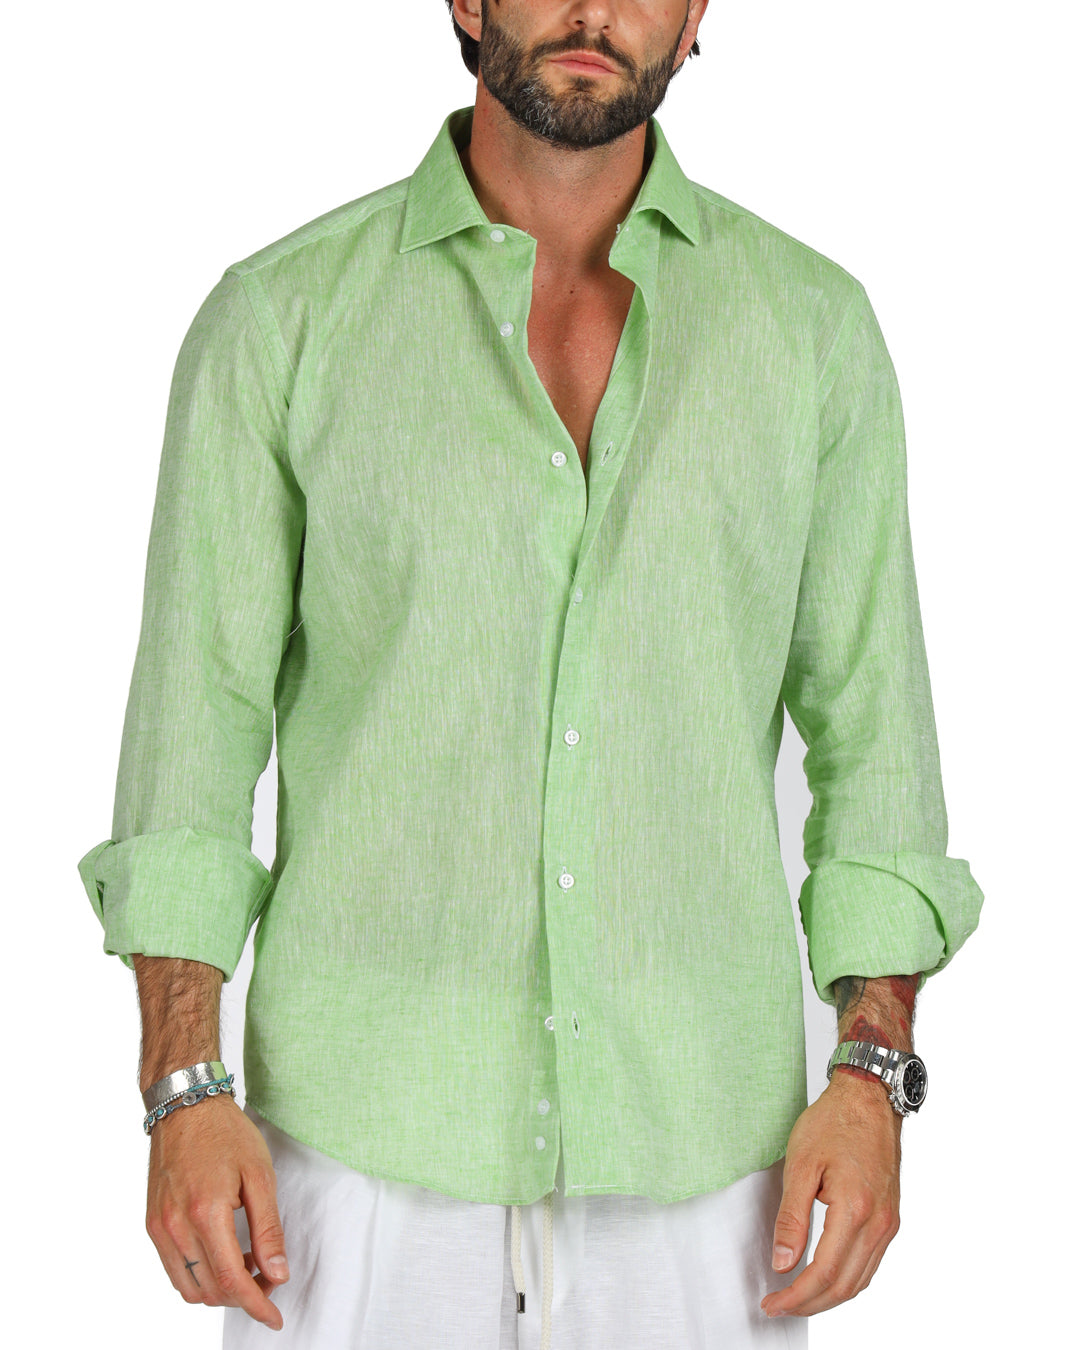 Praiano - Classic apple green linen shirt